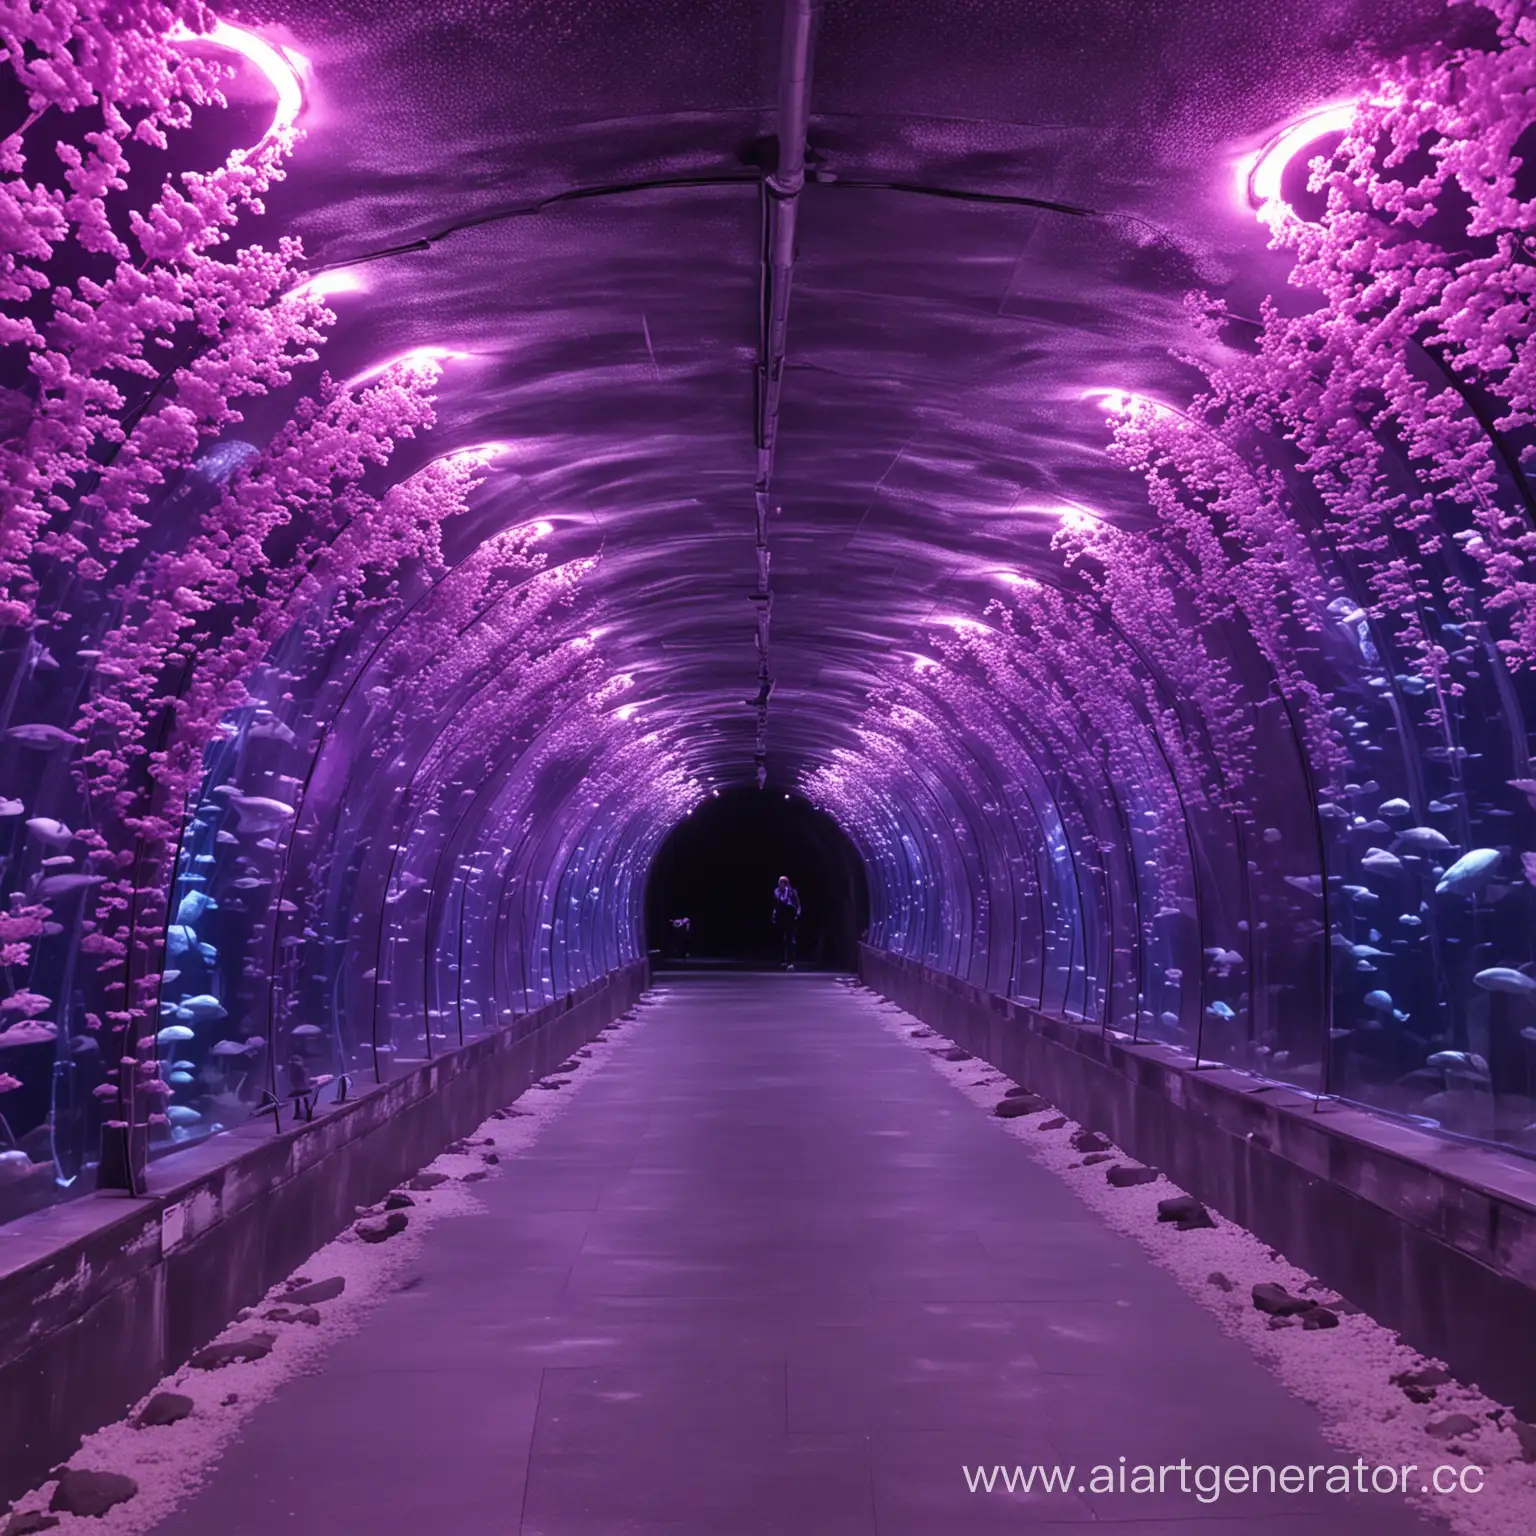 Lilac-Oceanarium-Tunnel-with-Glowing-Whales-Mesmerizing-Underwater-Scene